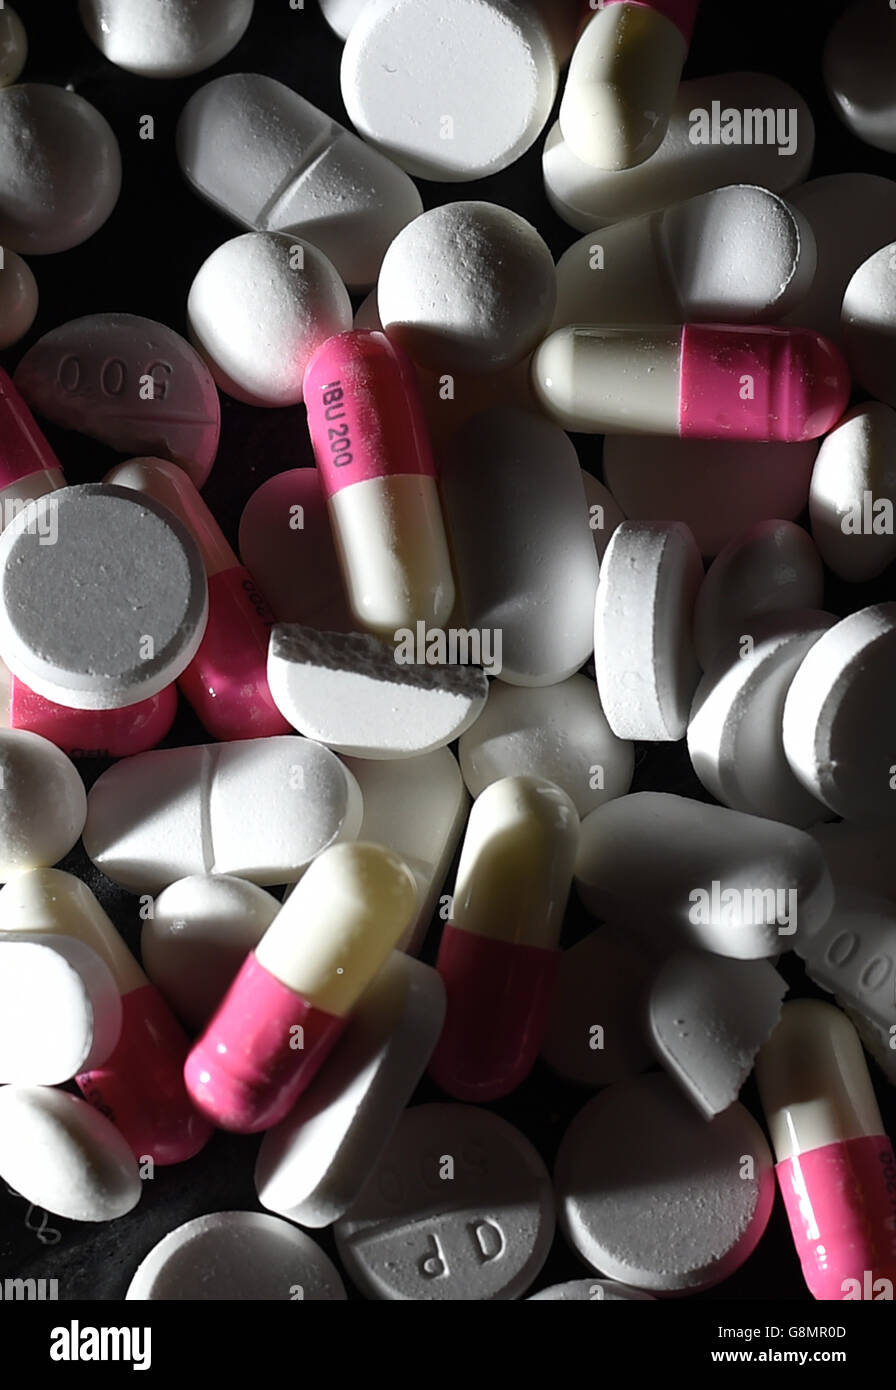 Stock photo of a mixture of Paracetamol and Ibuprofen tablets. Stock Photo